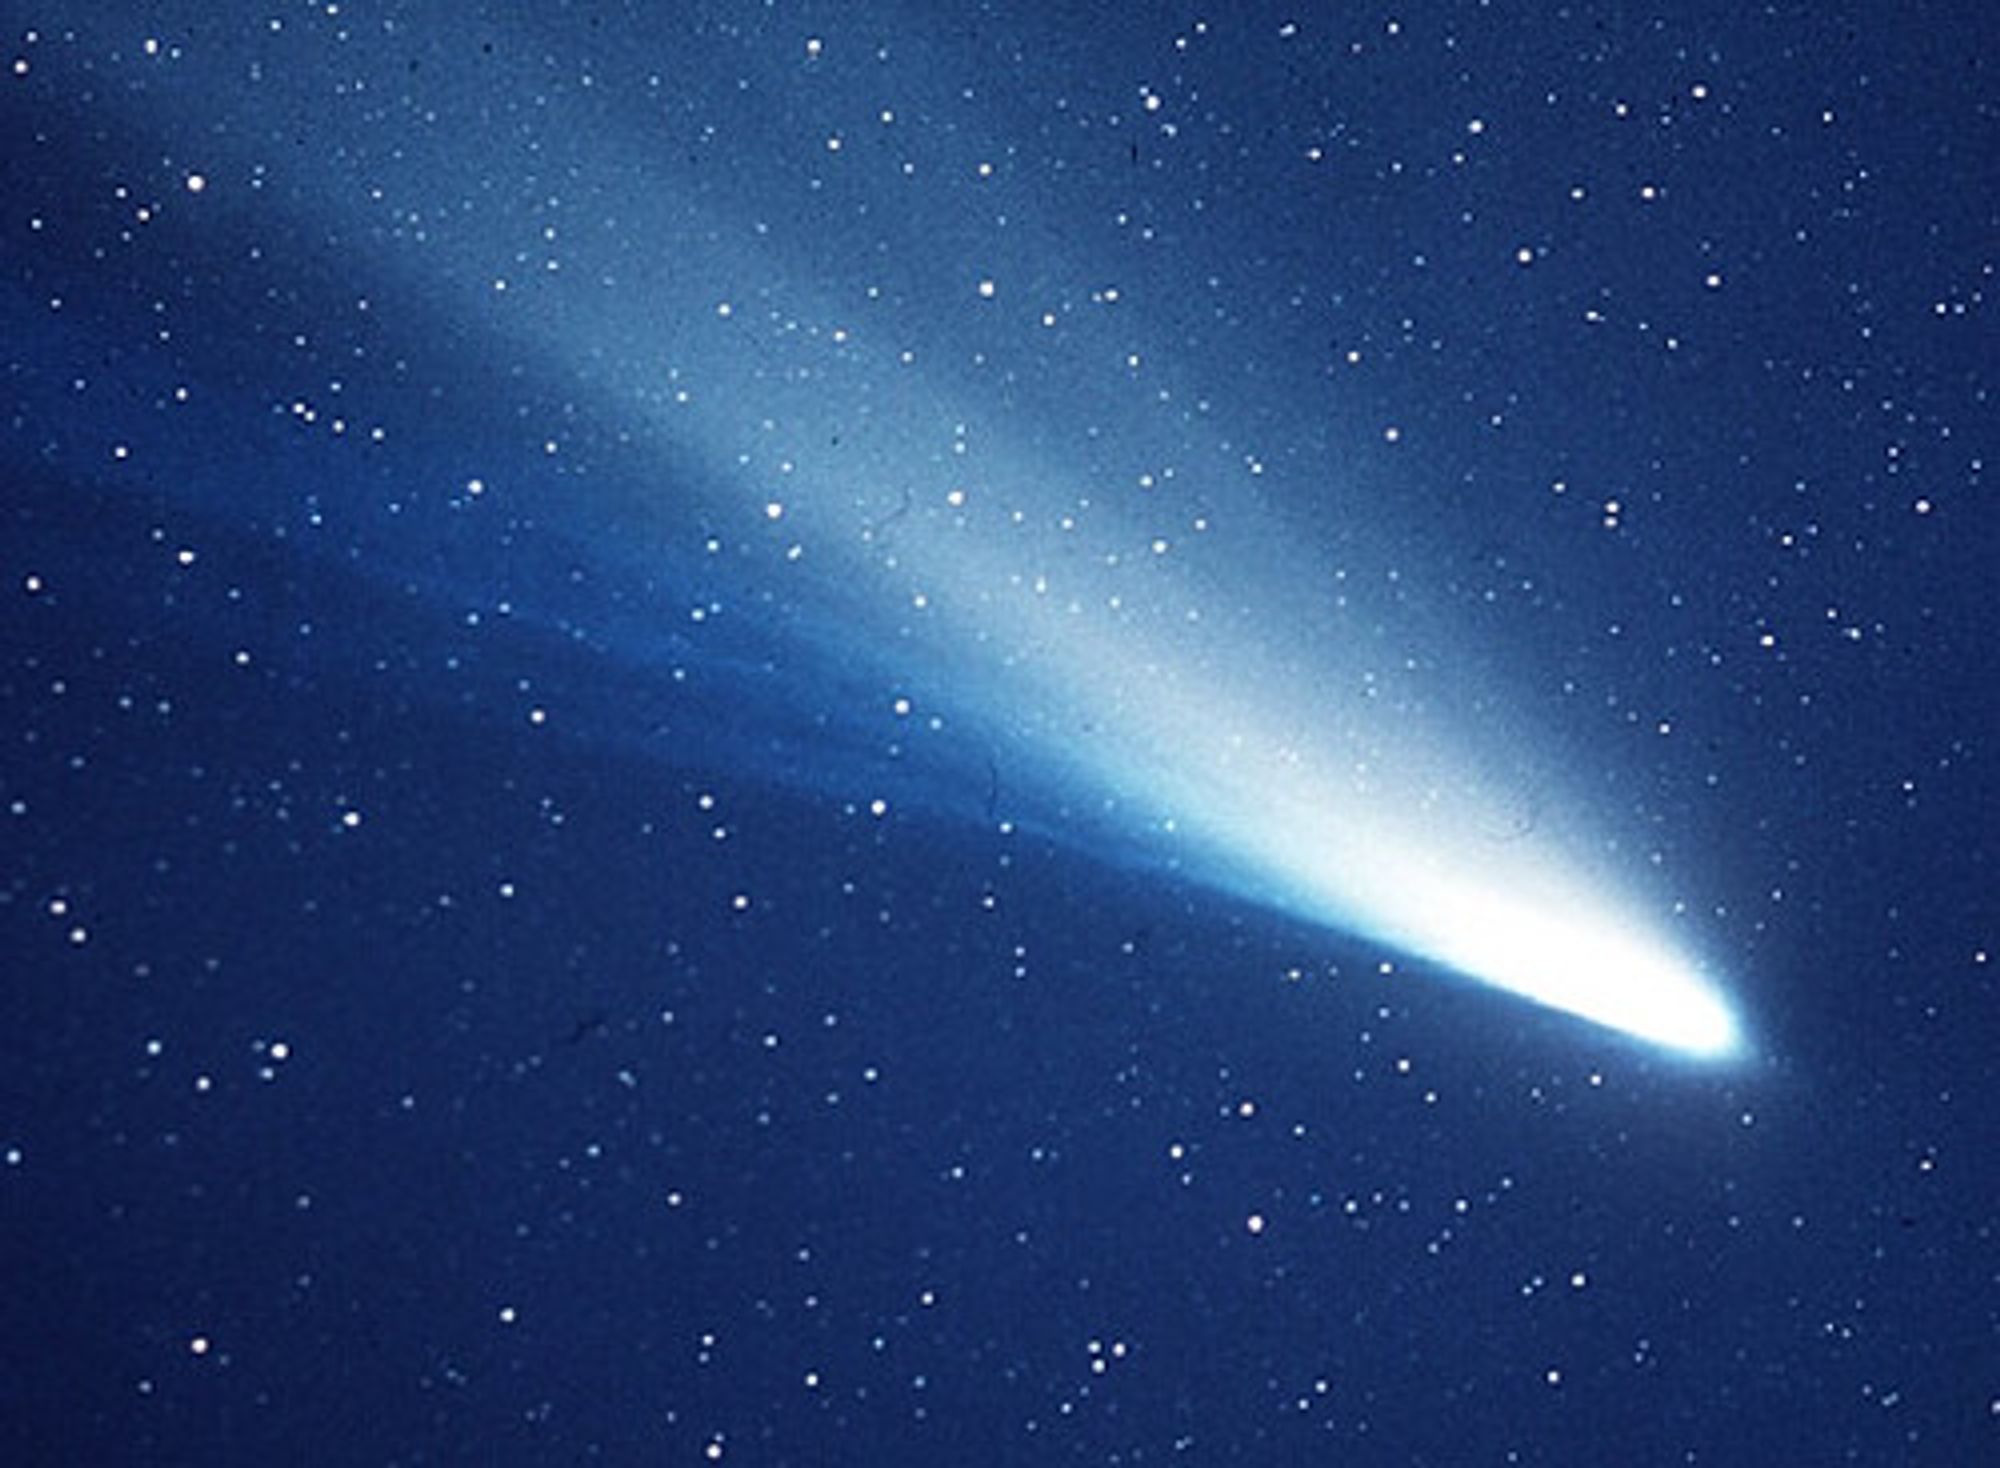 A blue comet streaking across the night sky